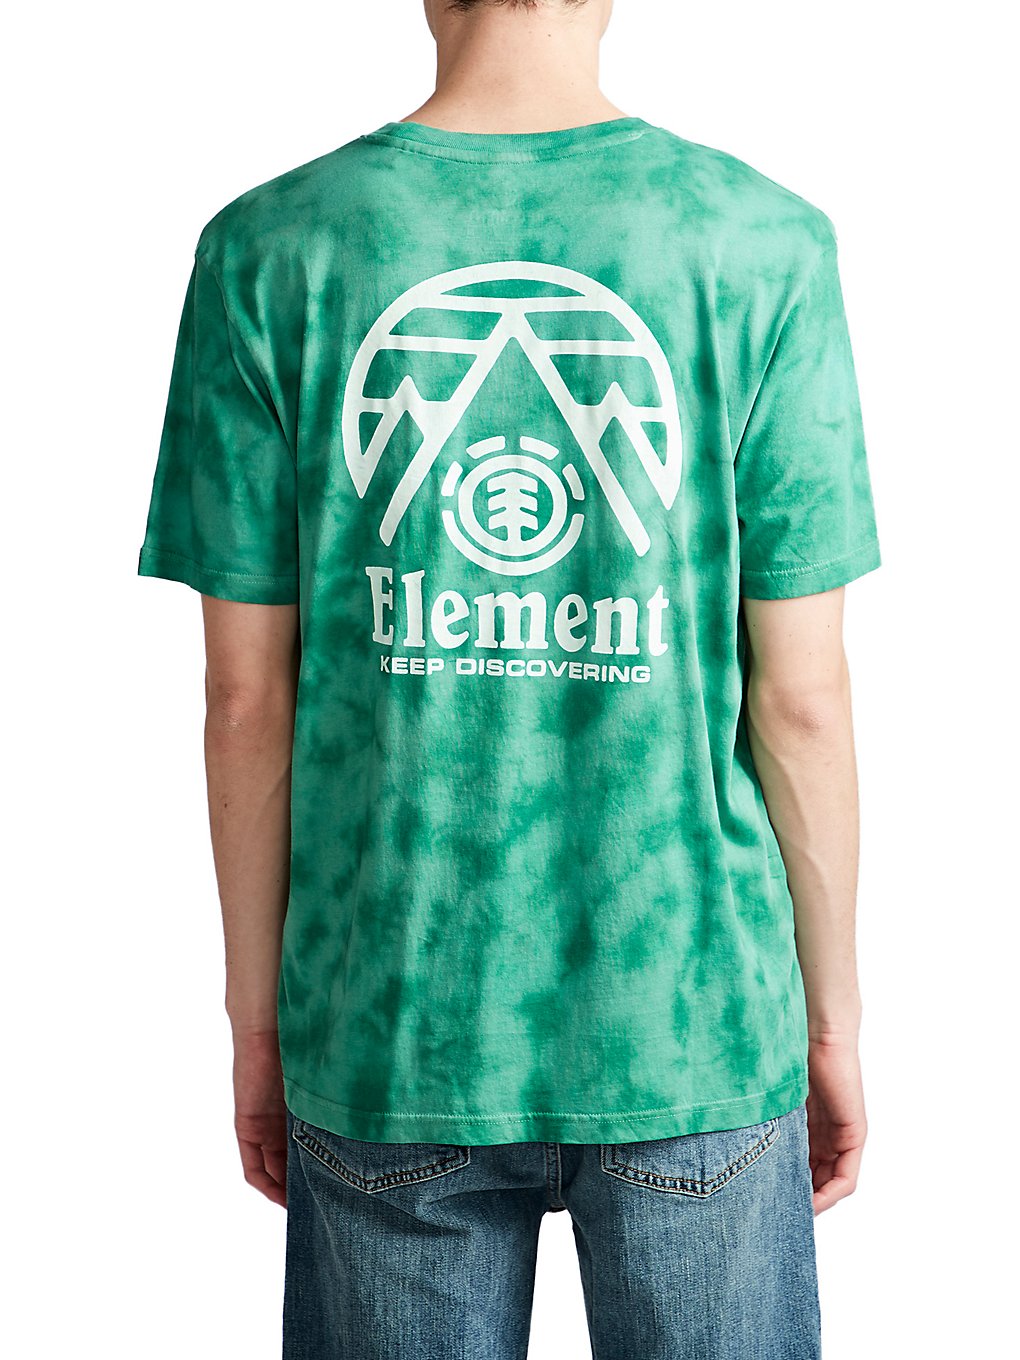 Element overcast t-shirt vihreä, element